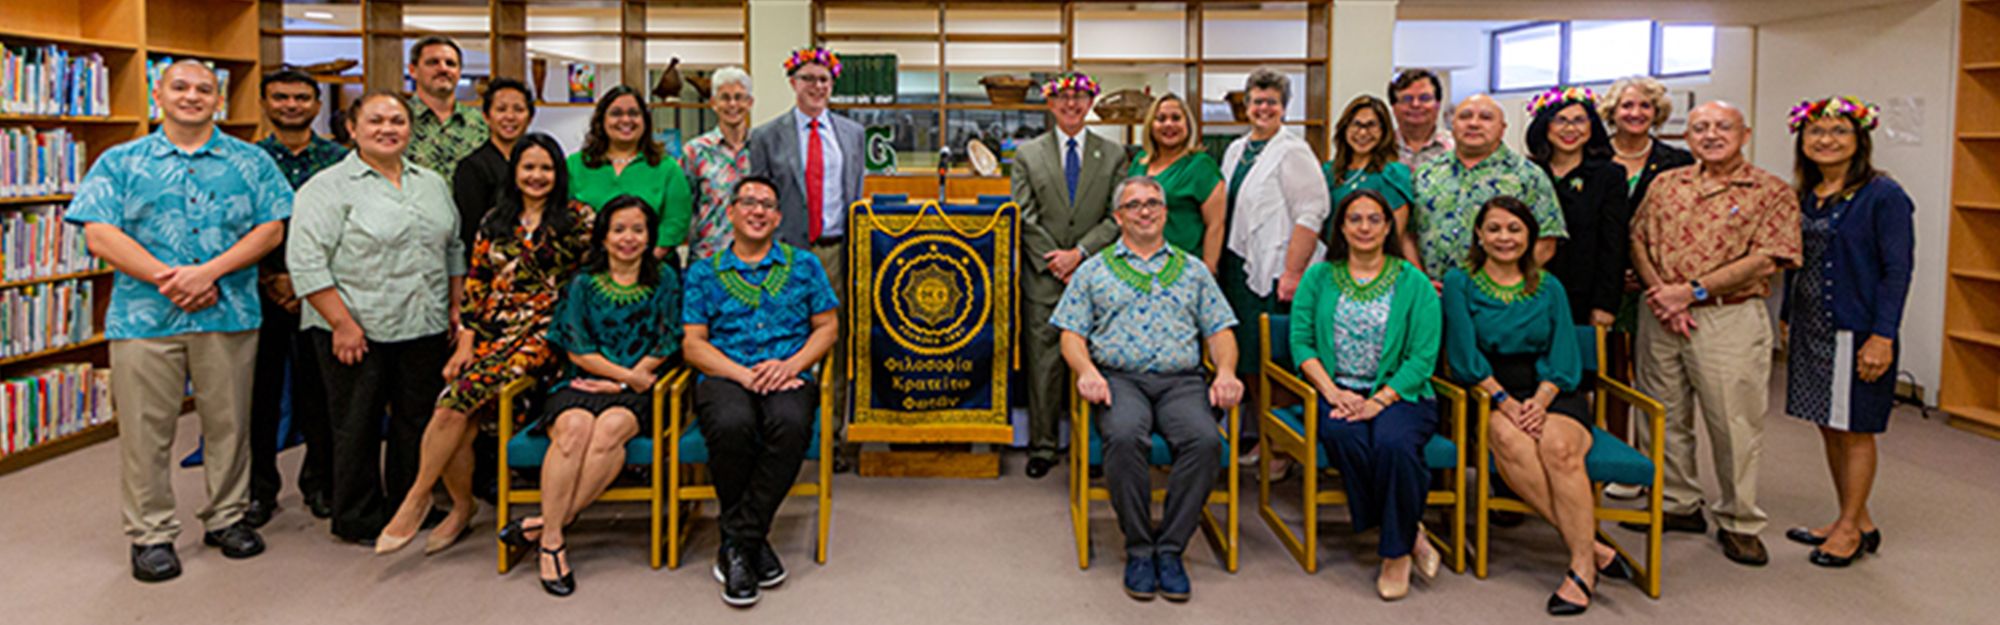 Phi Kappa Phi Honor Society admin and faculty members